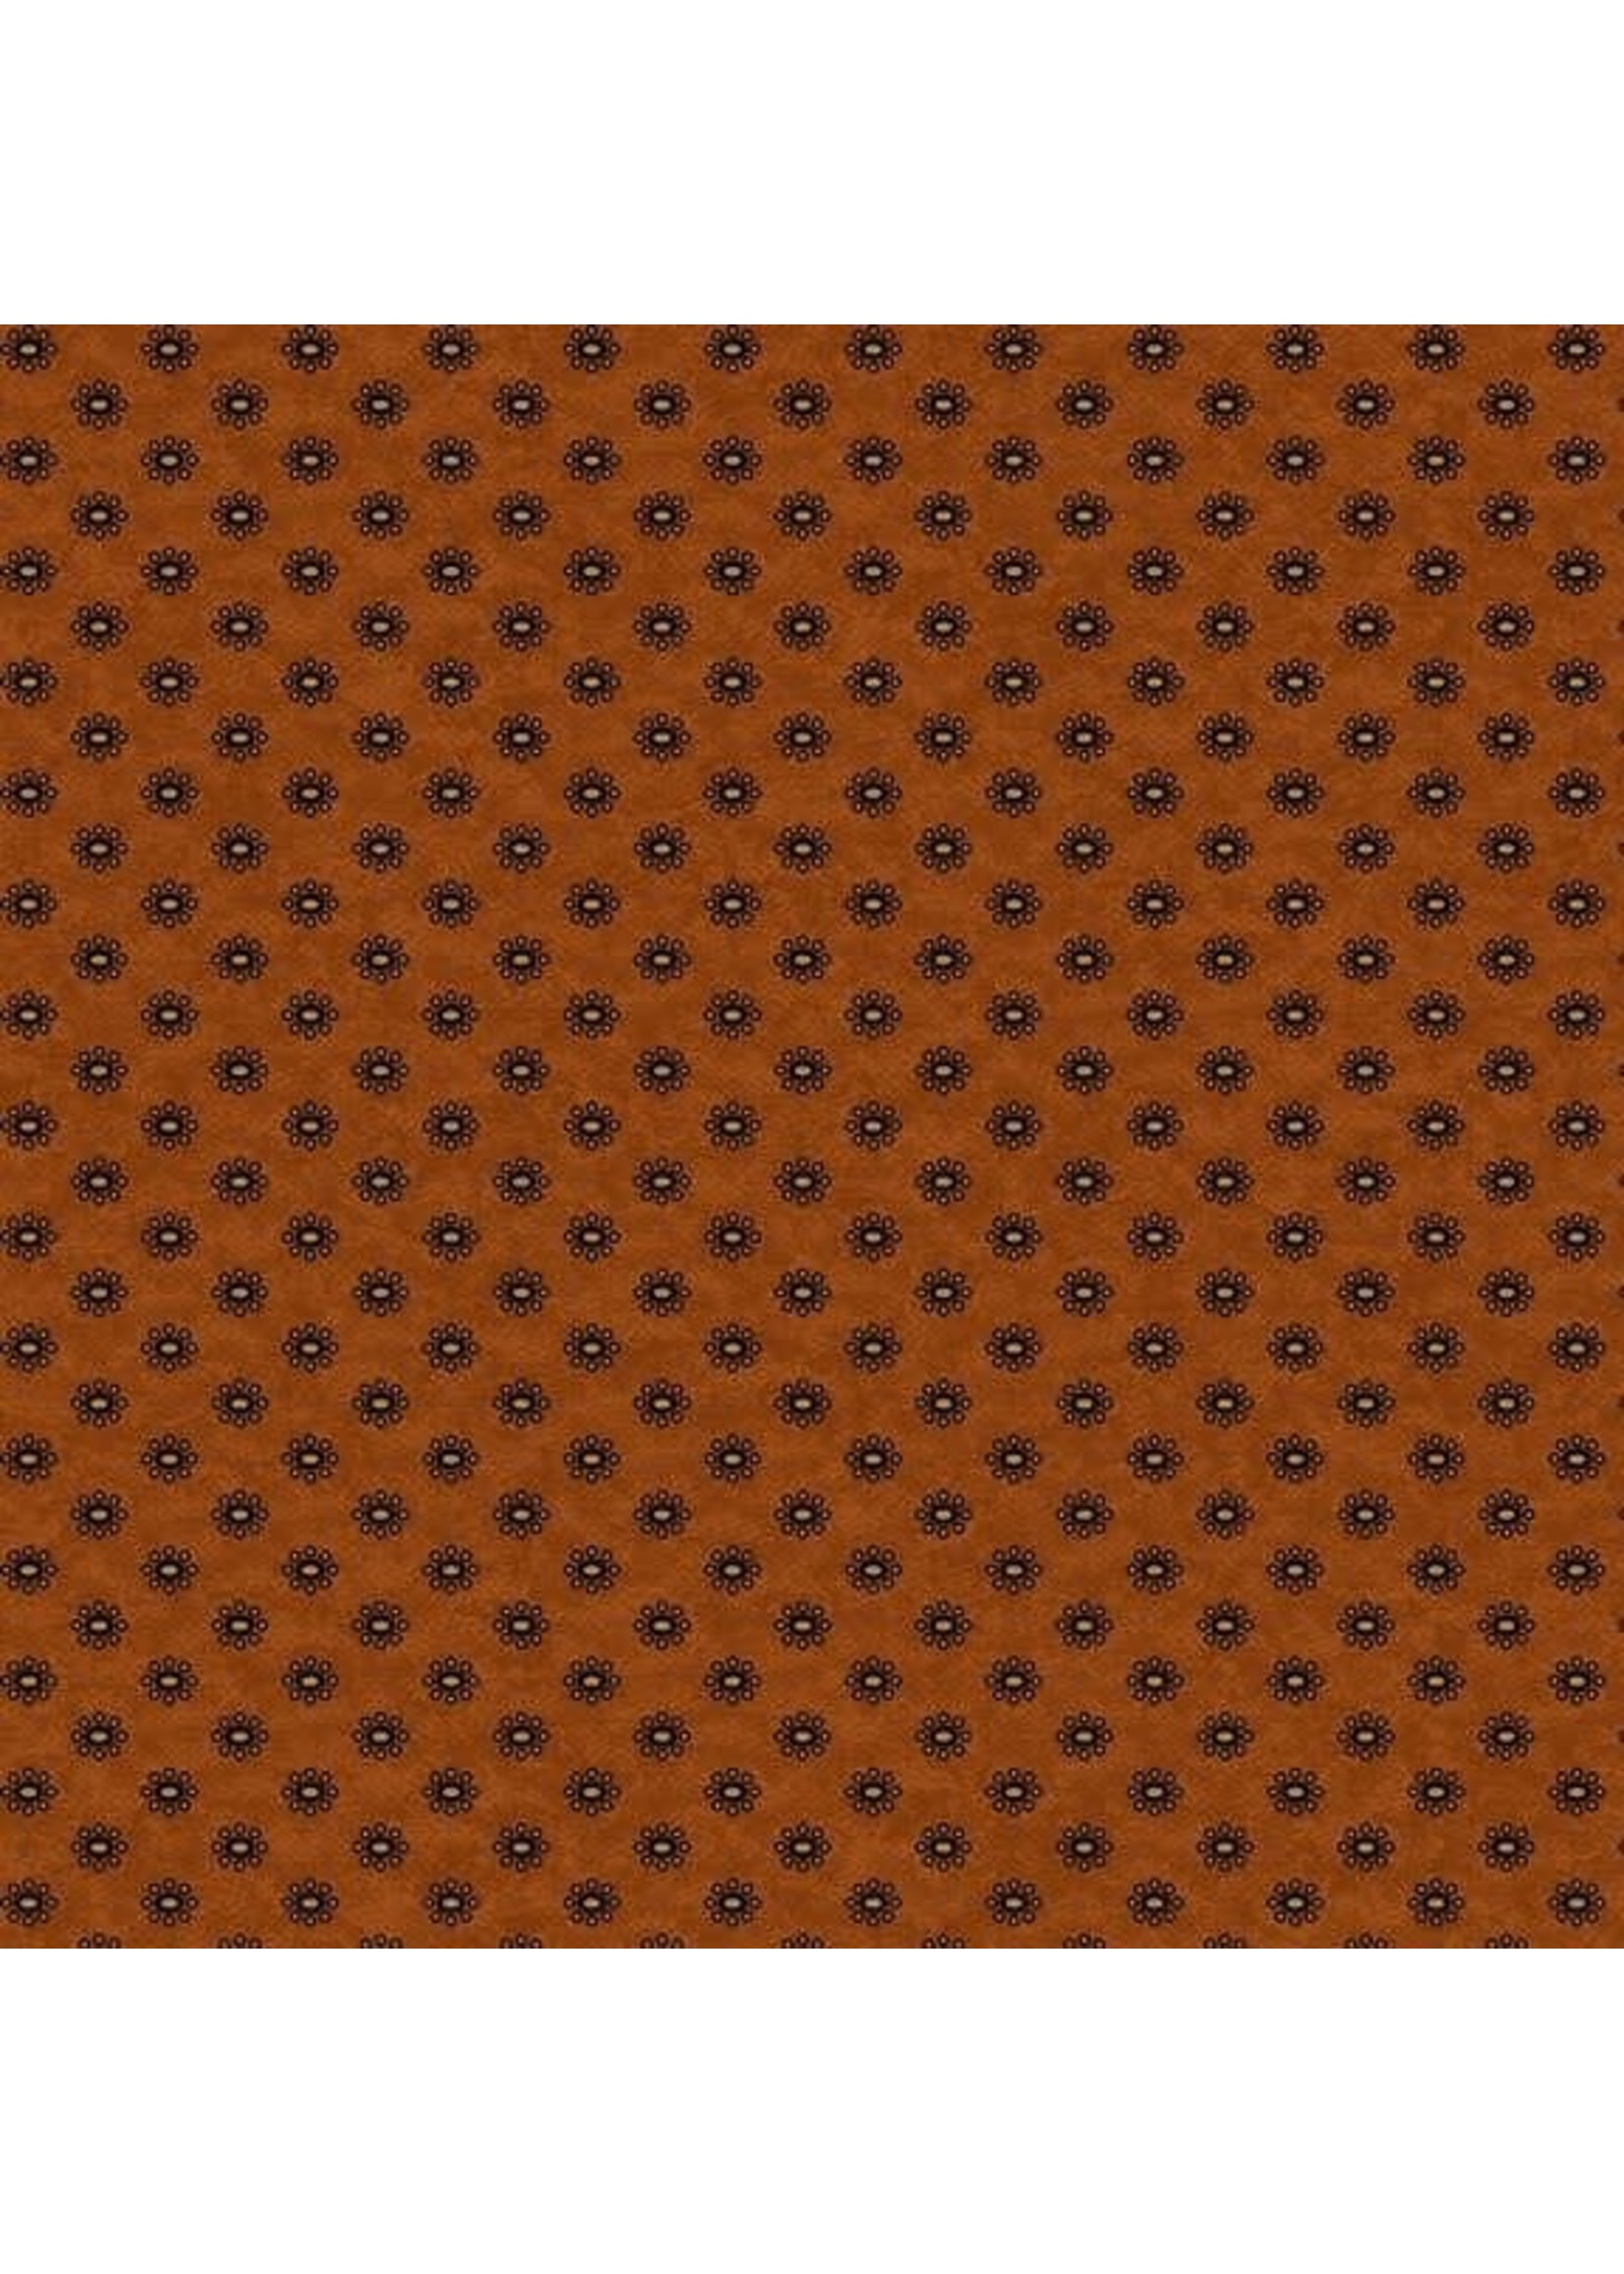 Marcus Fabrics Cheddar & Coal - Rust - 1773